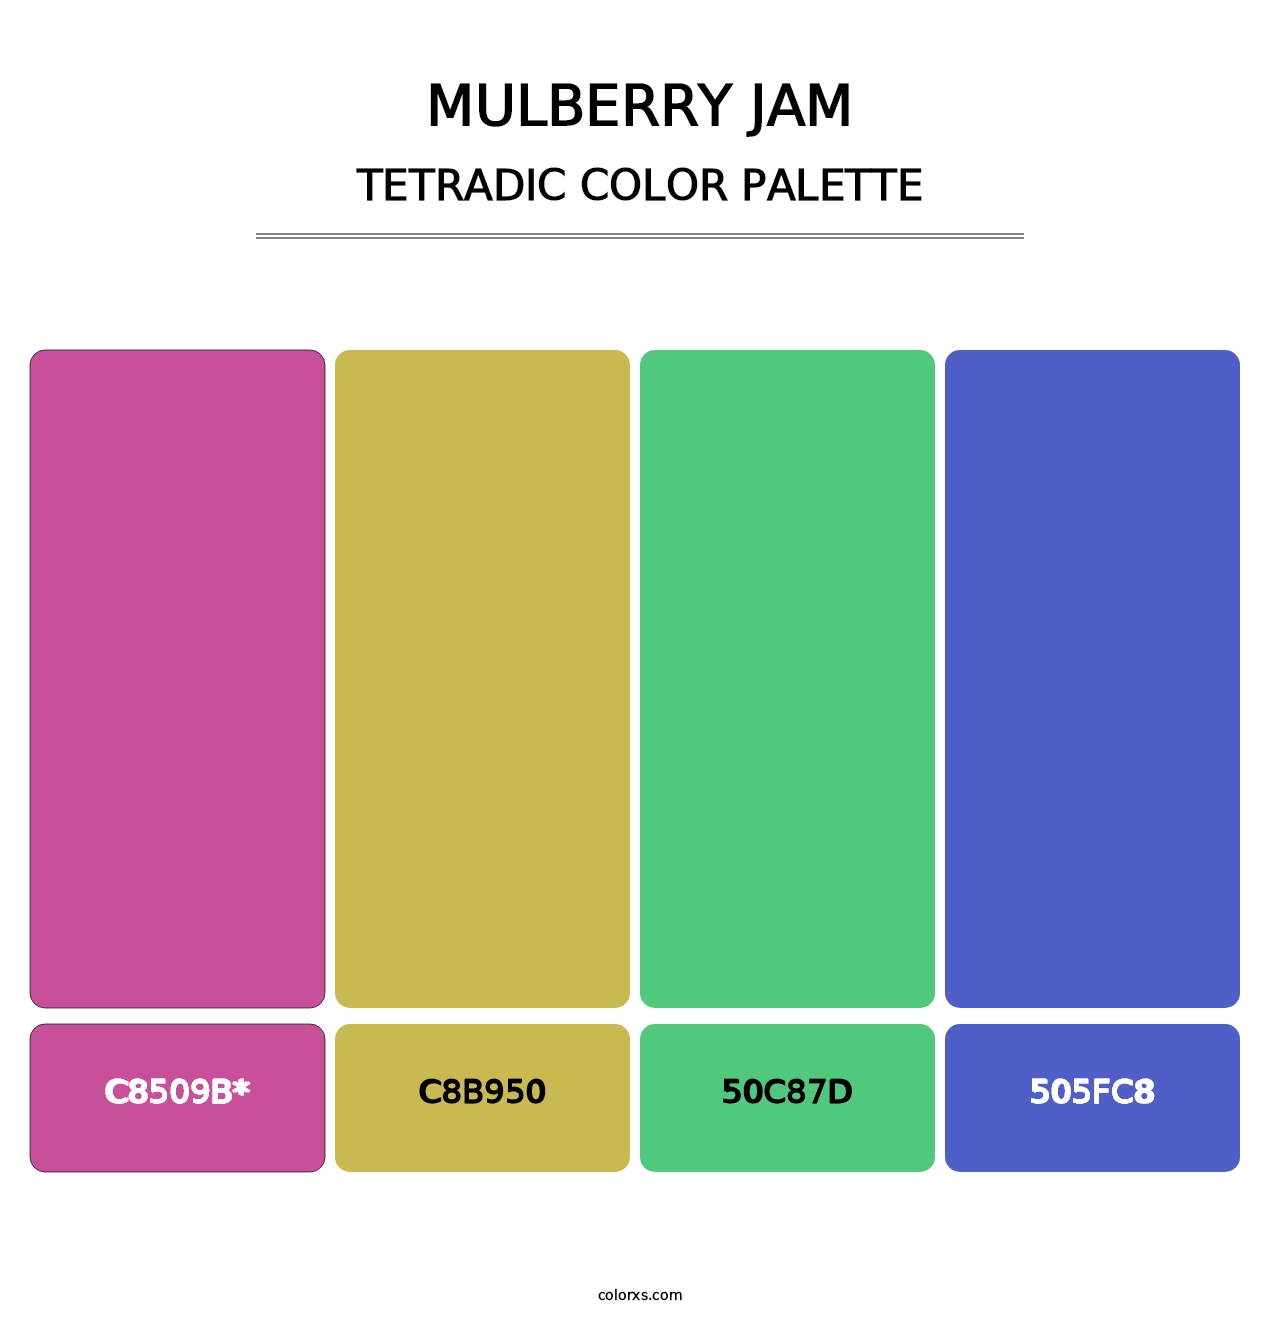 Mulberry Jam - Tetradic Color Palette